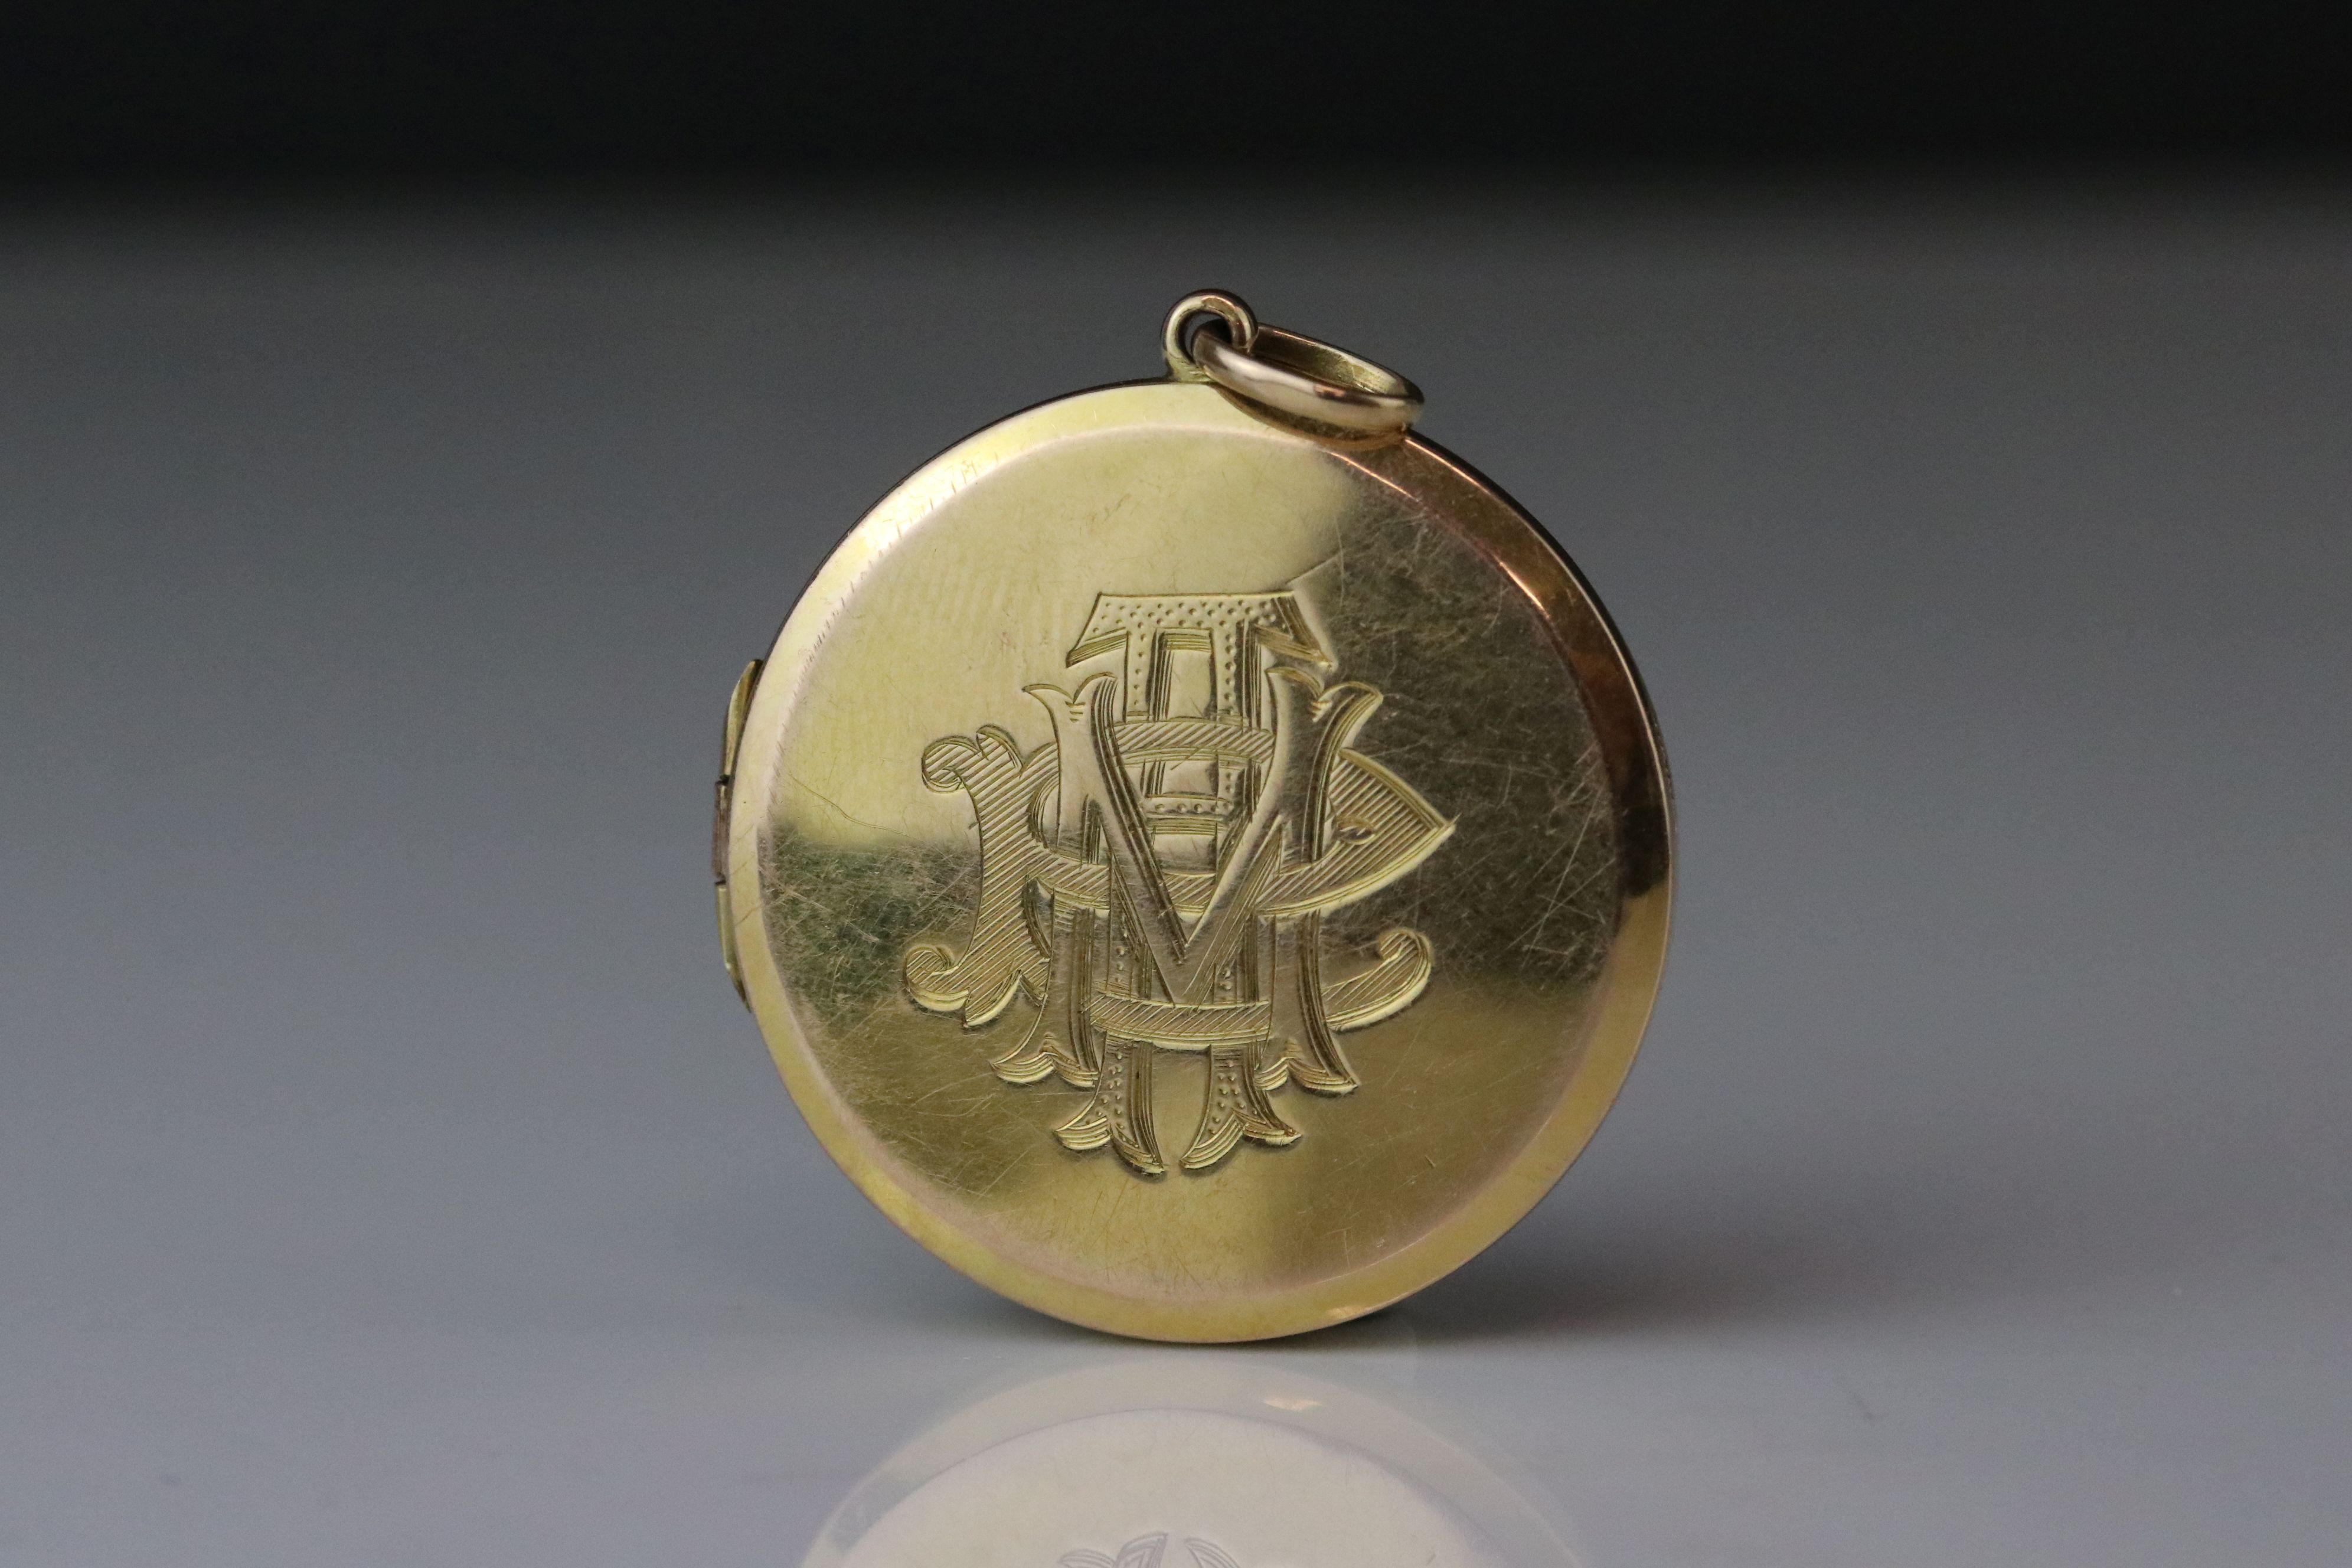 9ct gold circular locket, engraved monogram, diameter approx 3cm